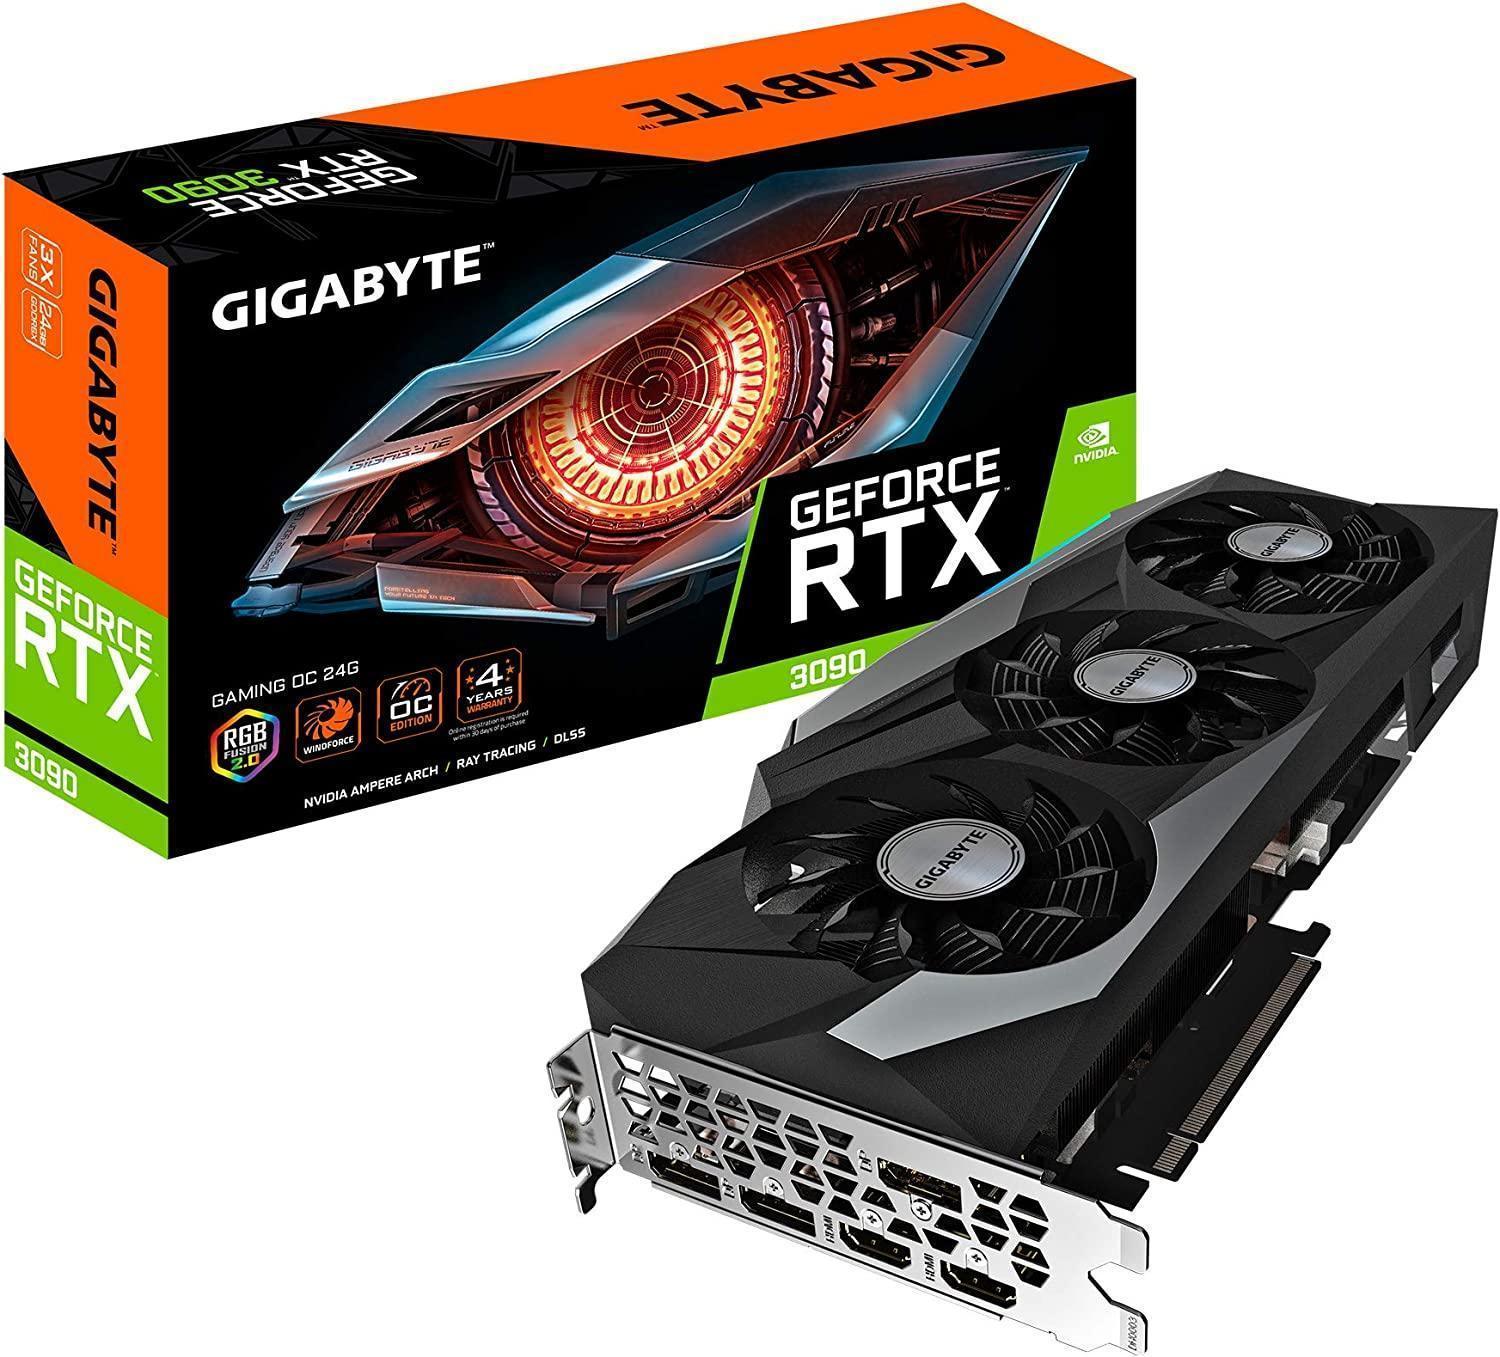 Gigabyte GeForce RTX 3090 GAMING OC 24G Graphics Card, 3x WINDFORCE Fans, 24GB 384-Bit GDDR6X, GV-N3090GAMING OC-24GD Video Card